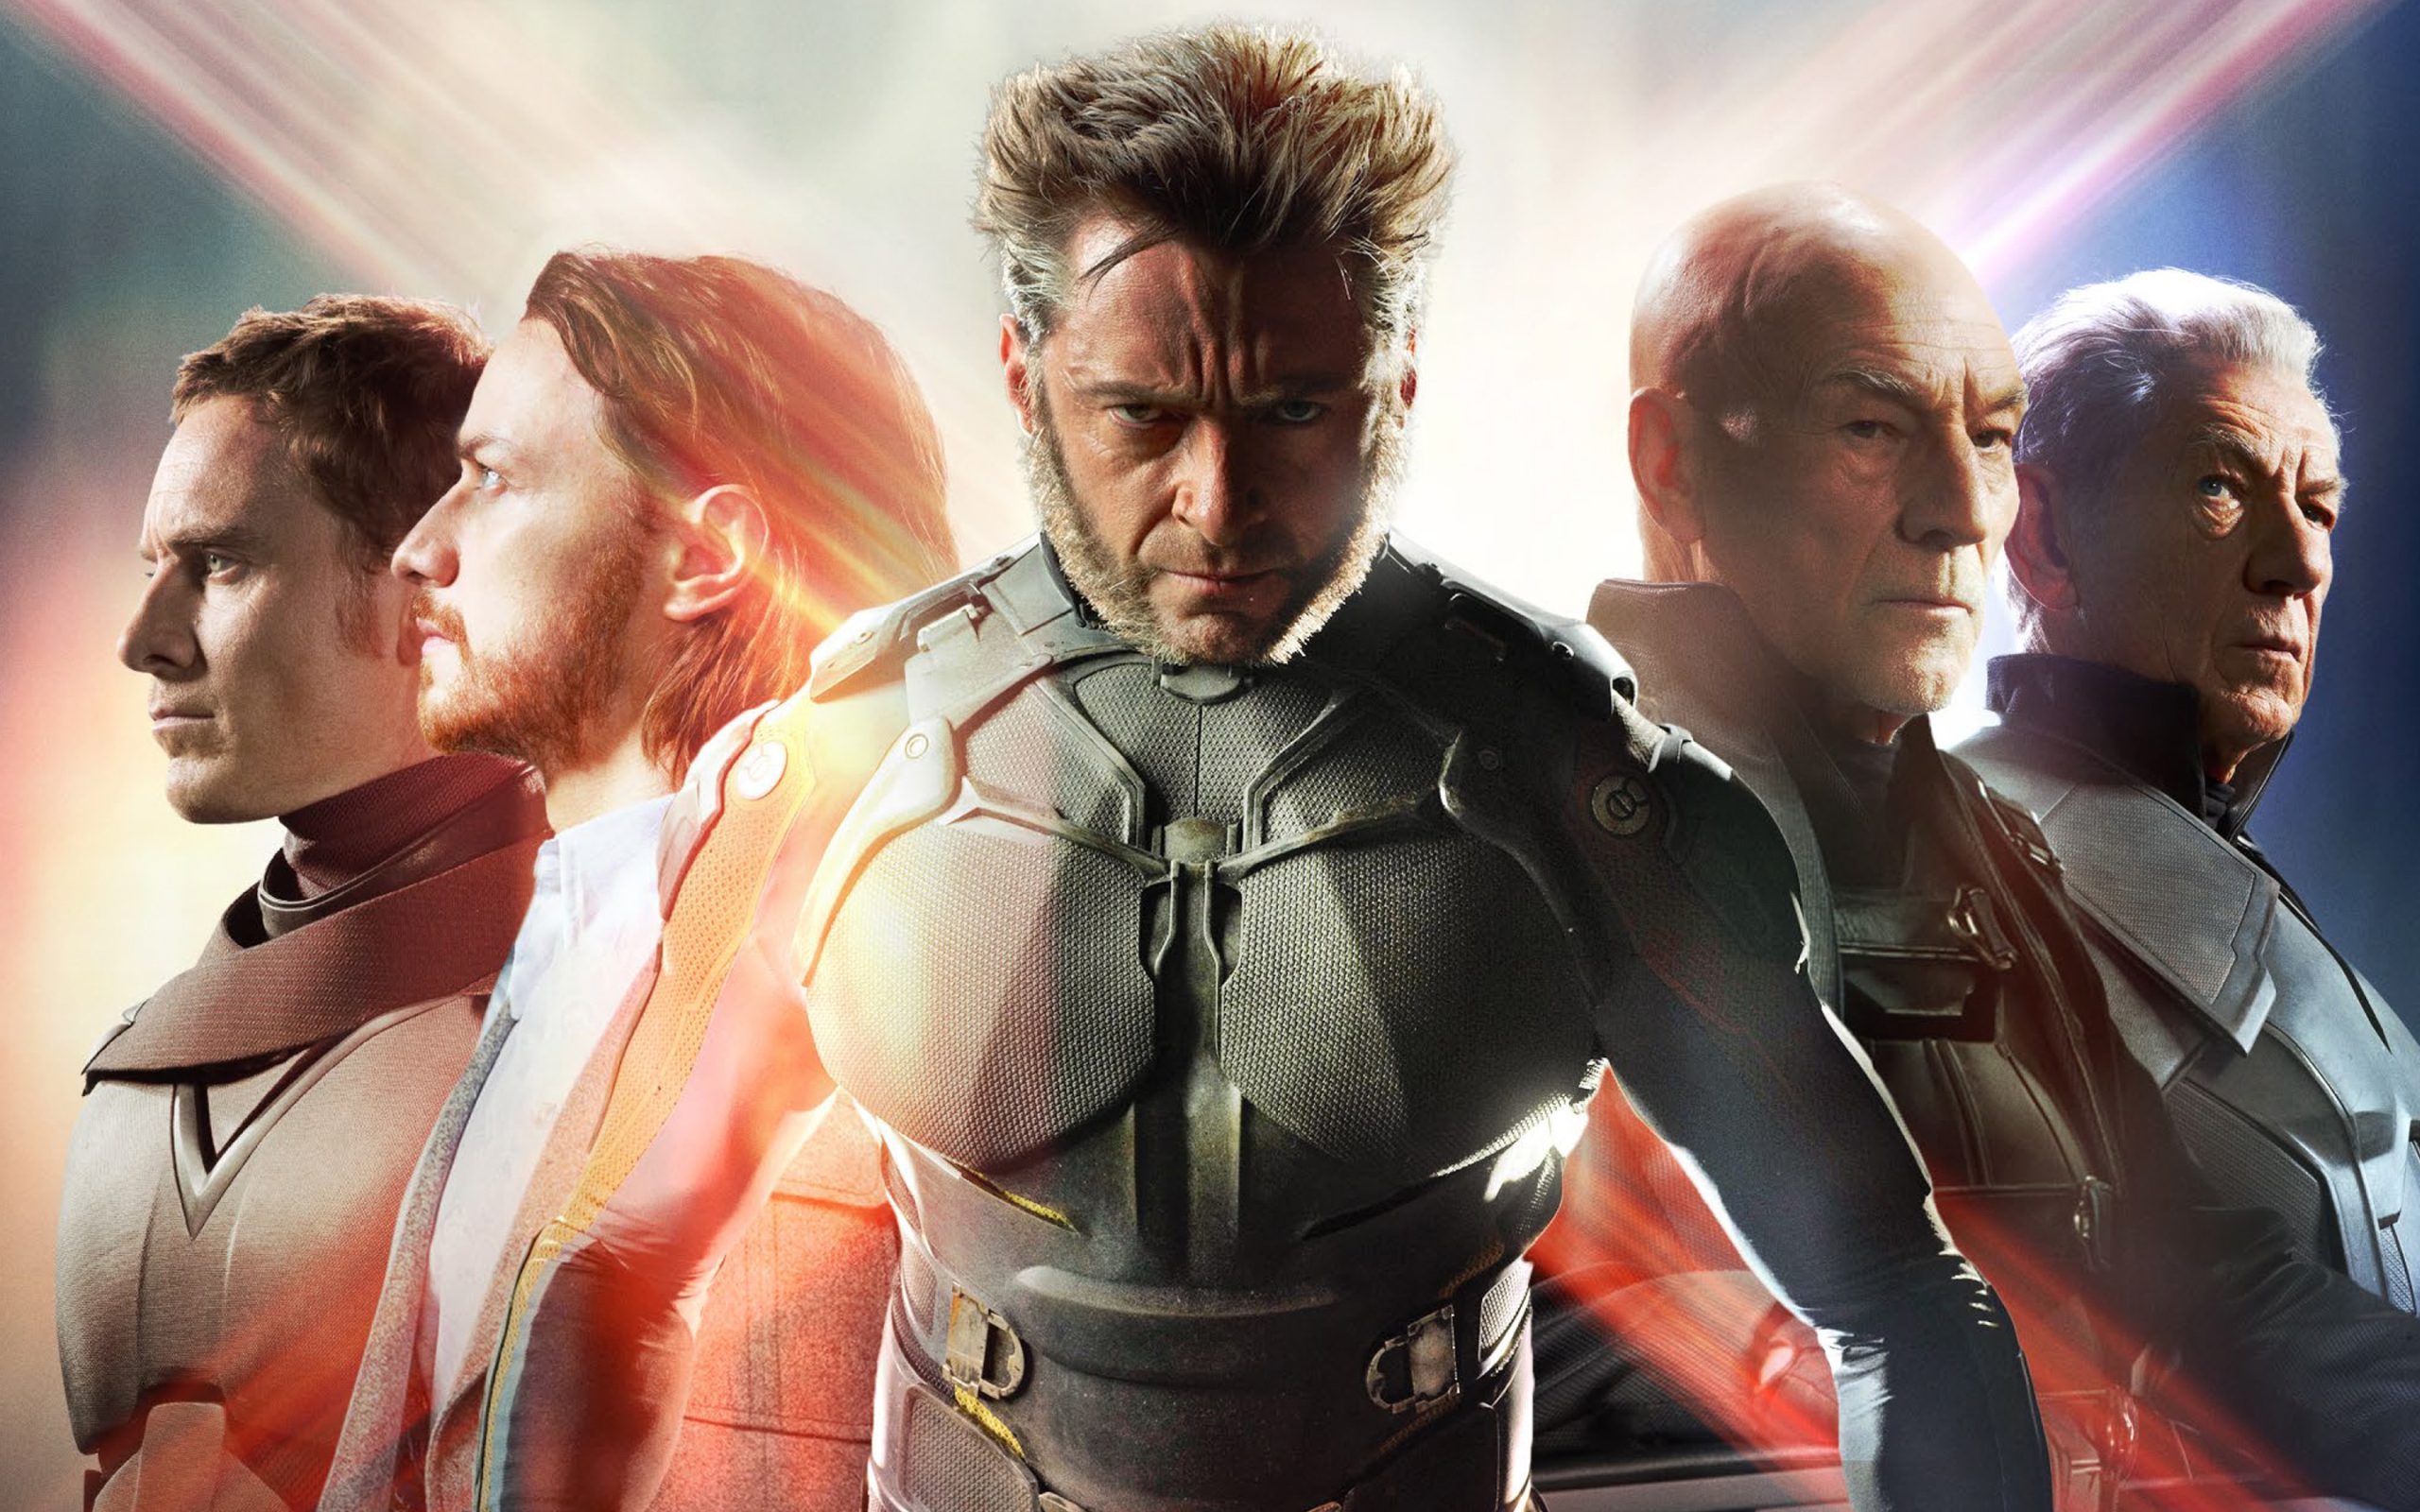 X-Men: Days of Future Past unleashes uncanny new trailer